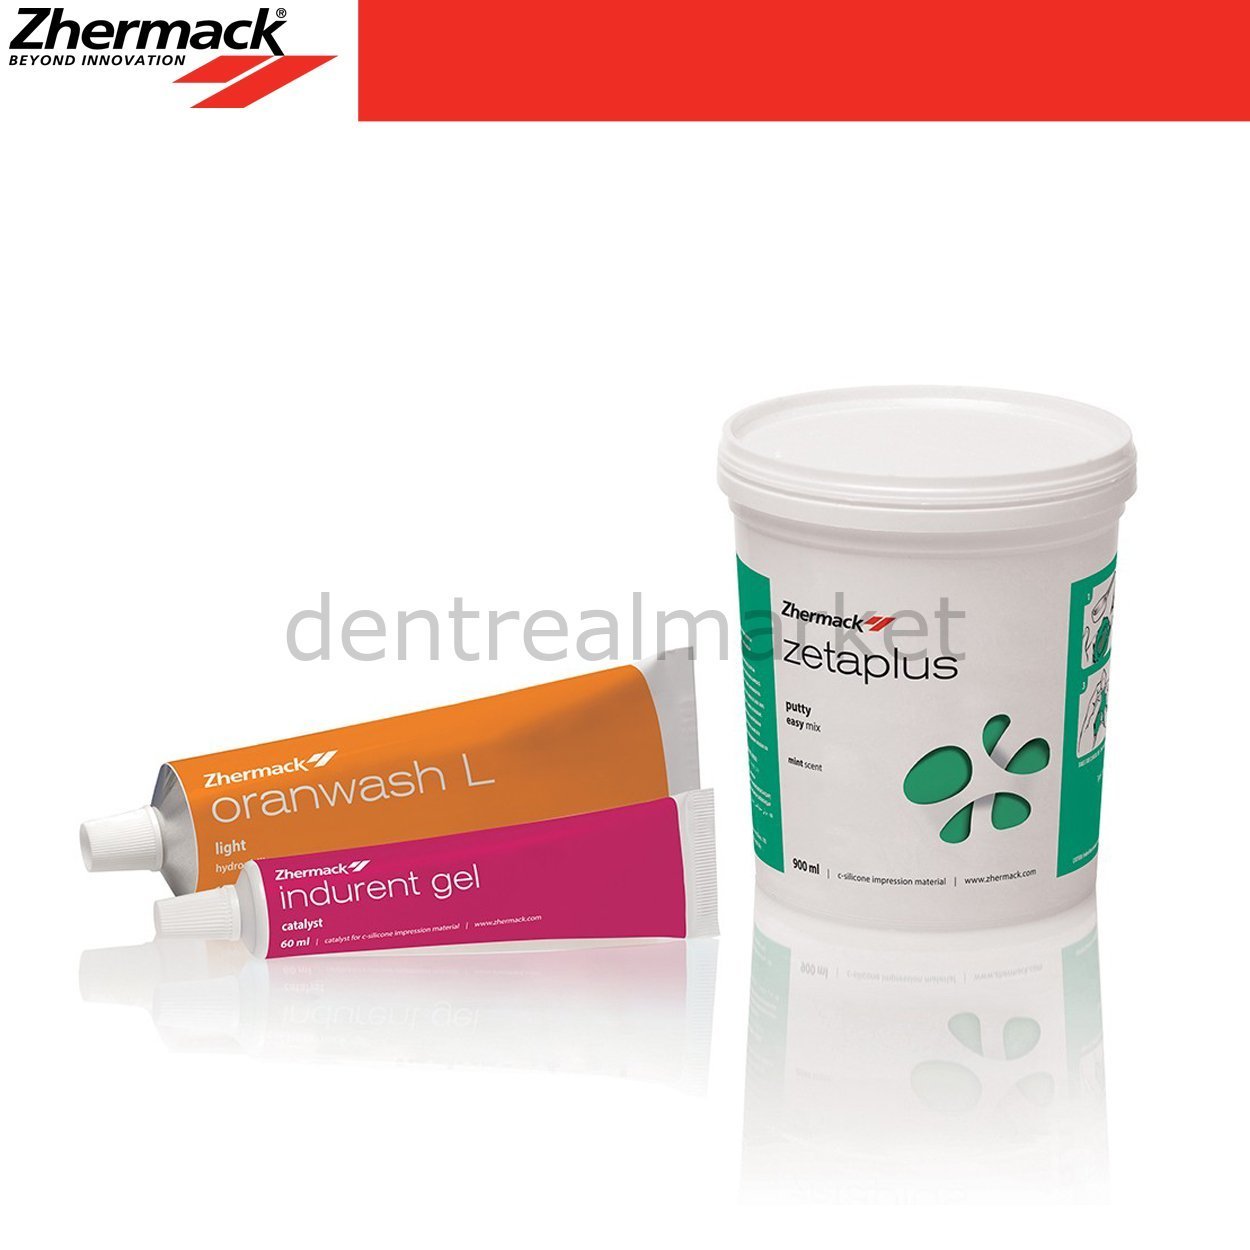 DentrealStore - Zhermack Zetaplus C Silicone Impression Material- Intro kit